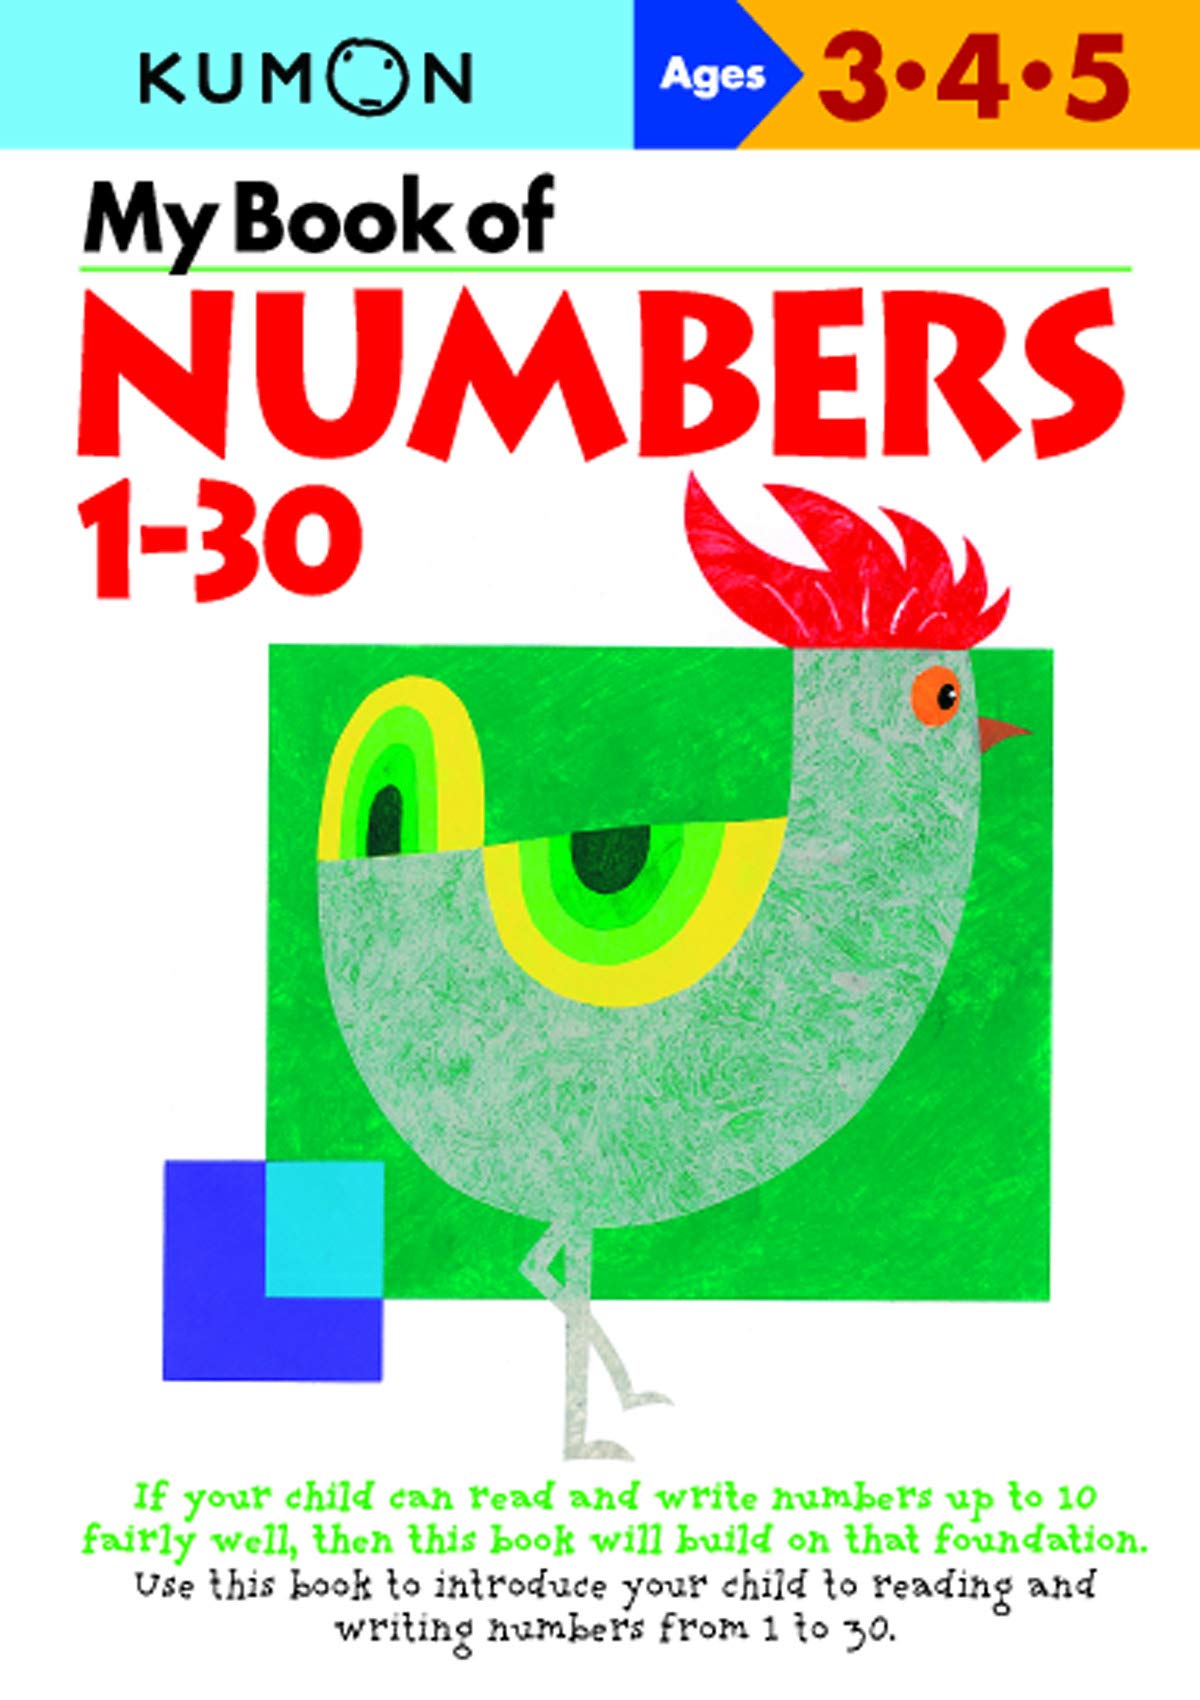 Kumon My Book Of Numbers 1-30